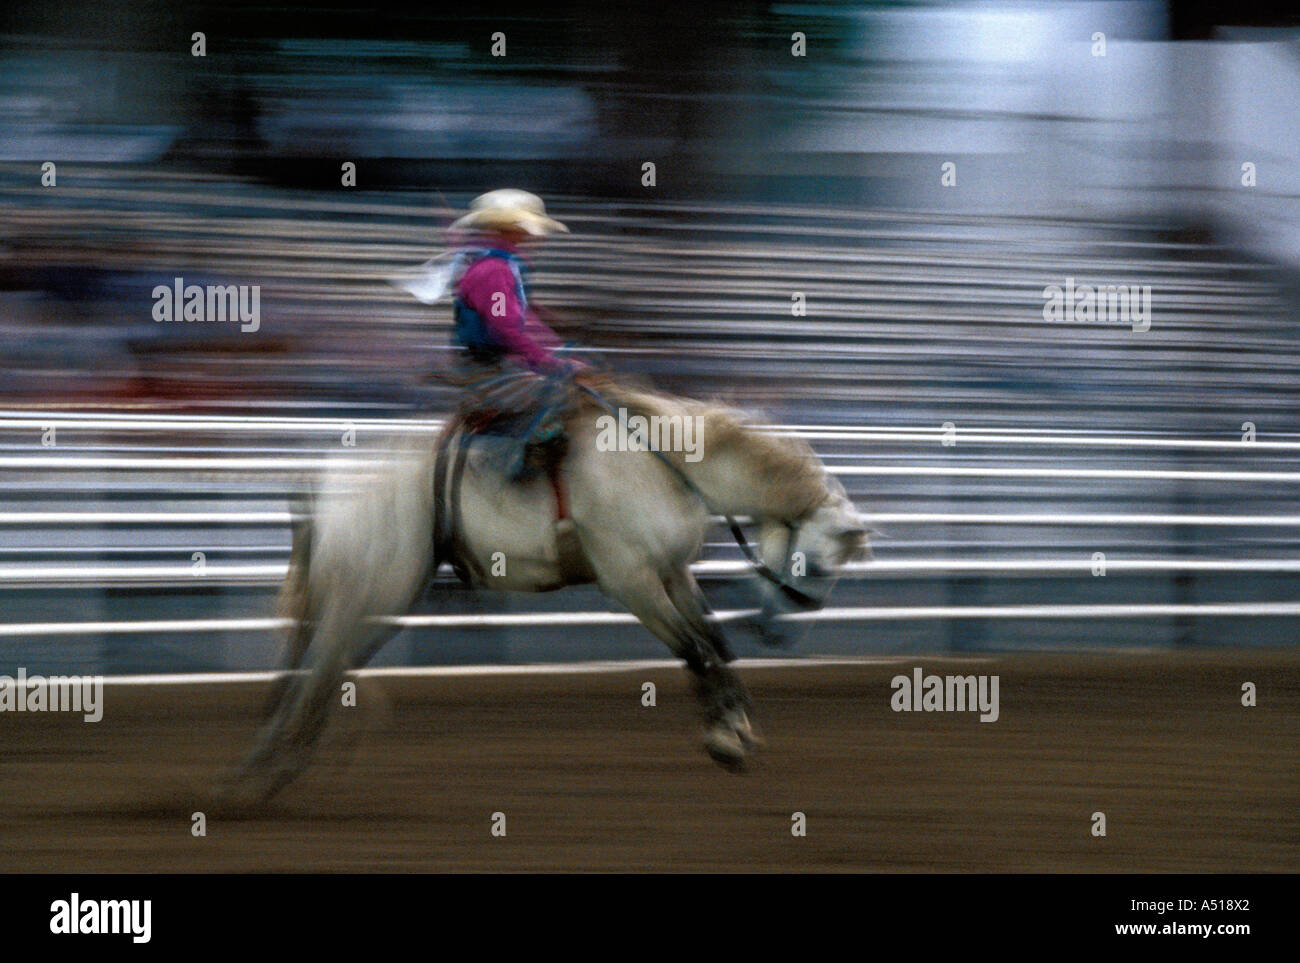 Cowboy riding bucking bronco Stock Photo